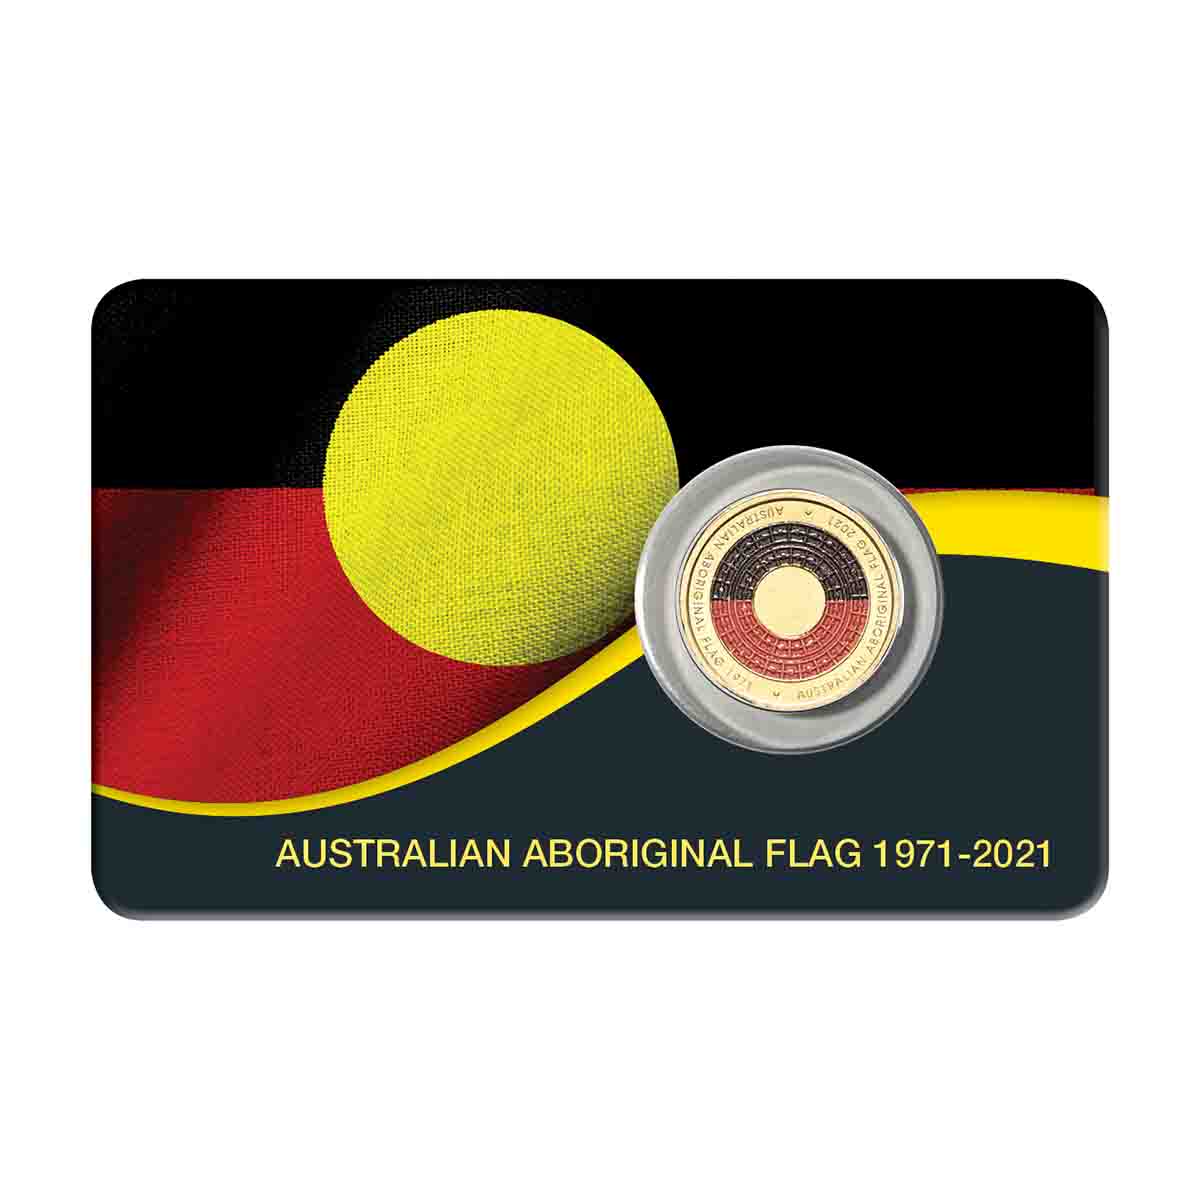 Aboriginal Flag 2021 $2 Al-Br Coin Pack